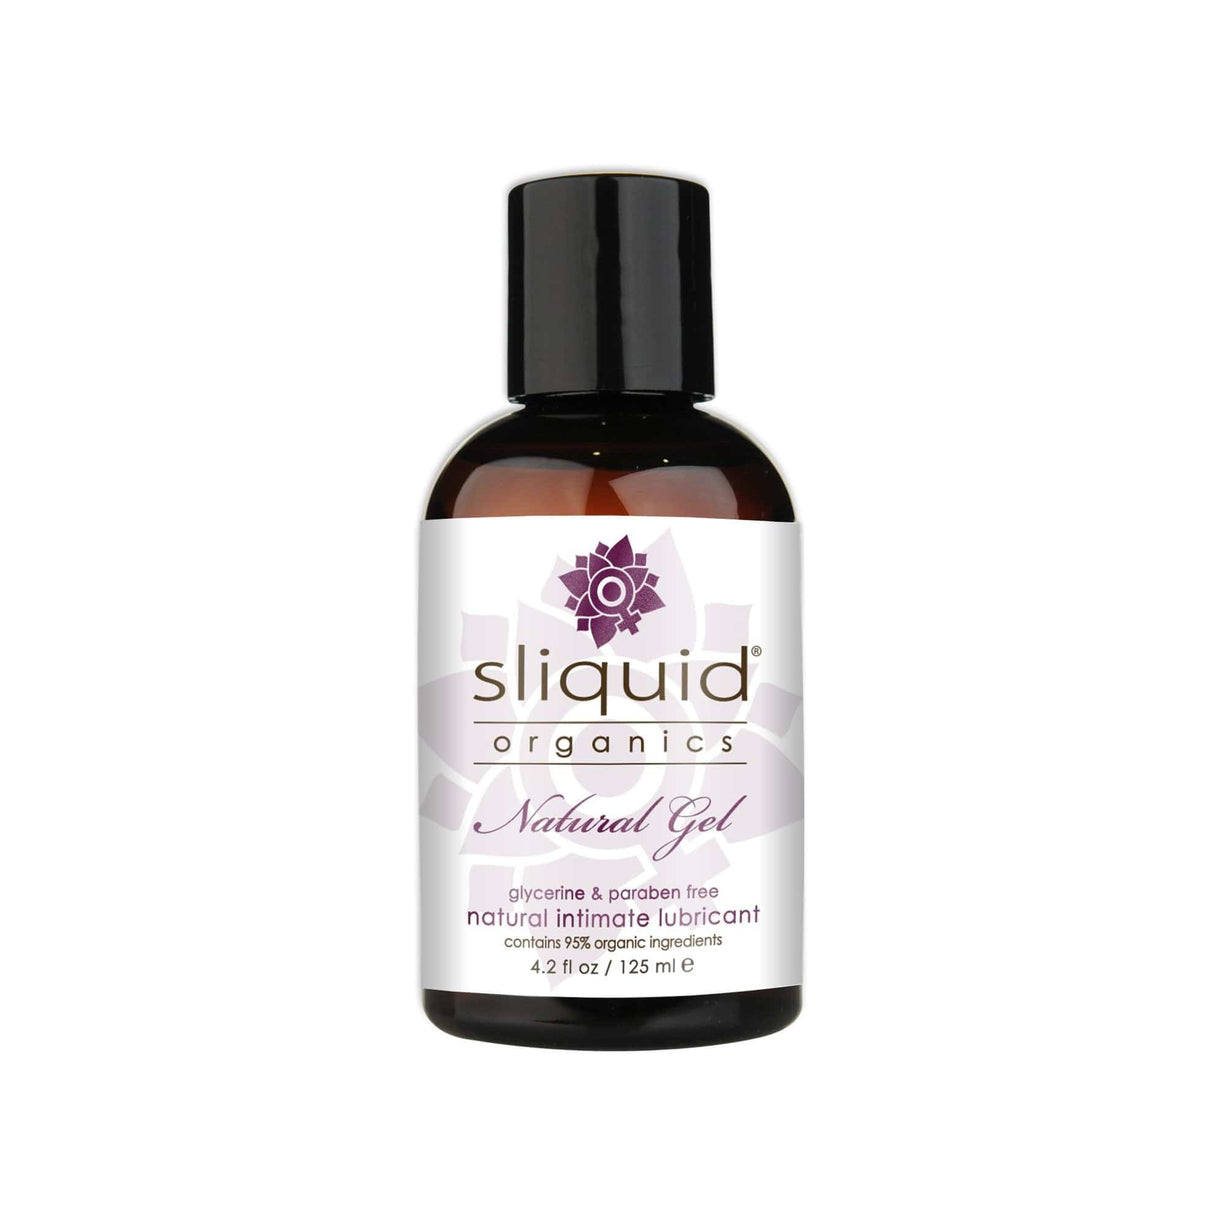 Sliquid - Organics Natural Gel Intimate Lubricant CherryAffairs